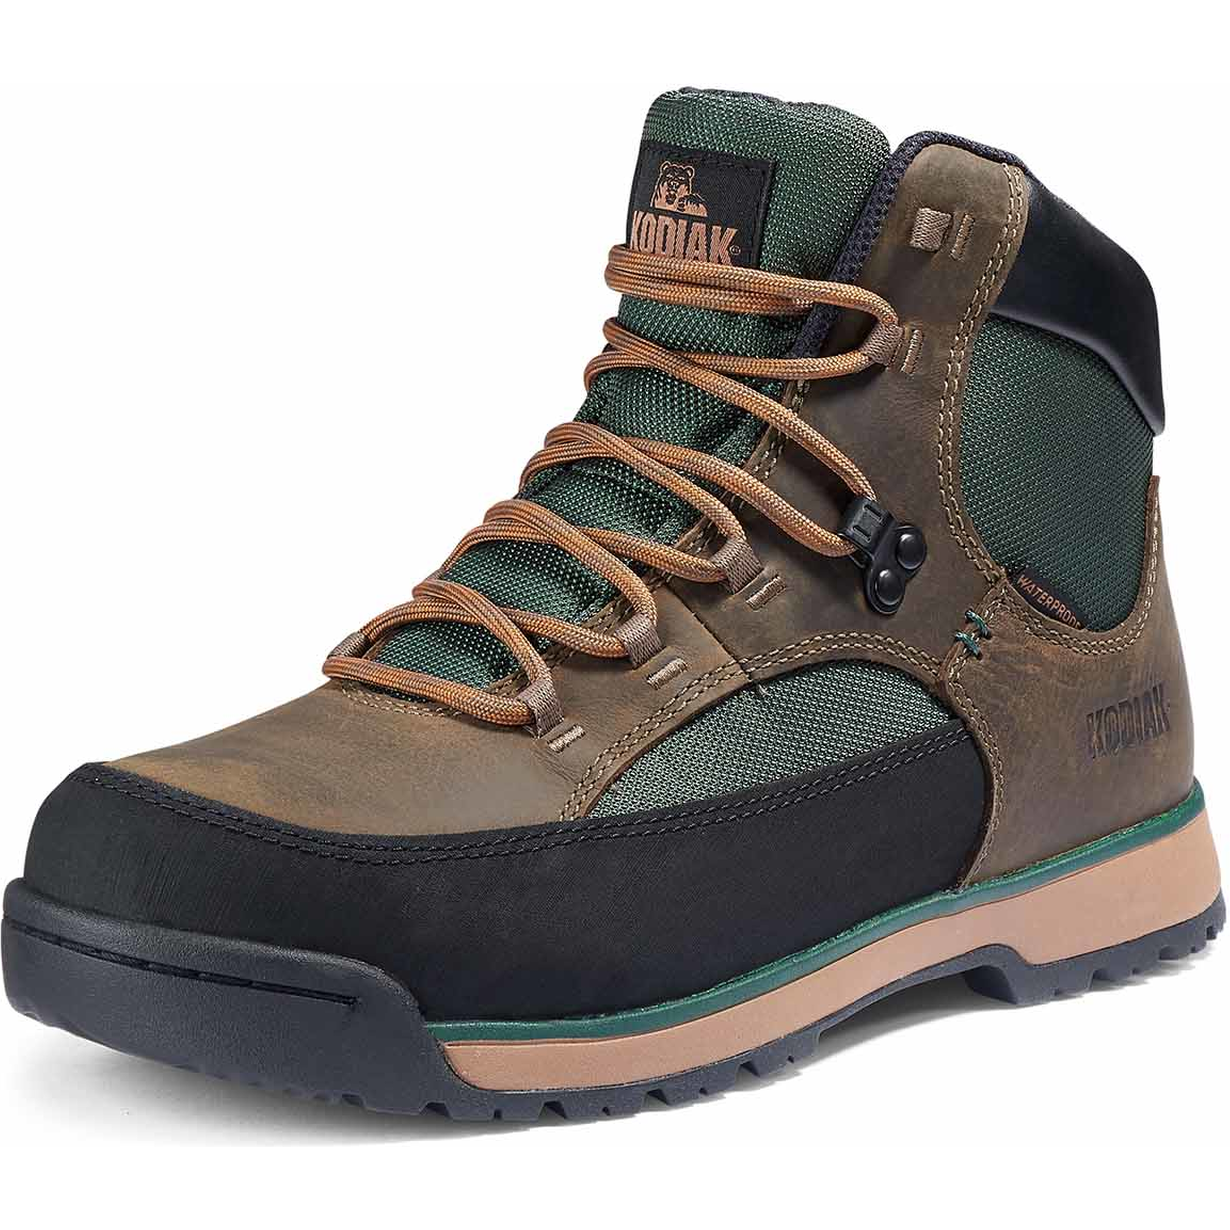 Kodiak Men's Greb Classic Steel Toe WP Hiker Safety Work Boot - Fossil 834XFS  - Overlook Boots